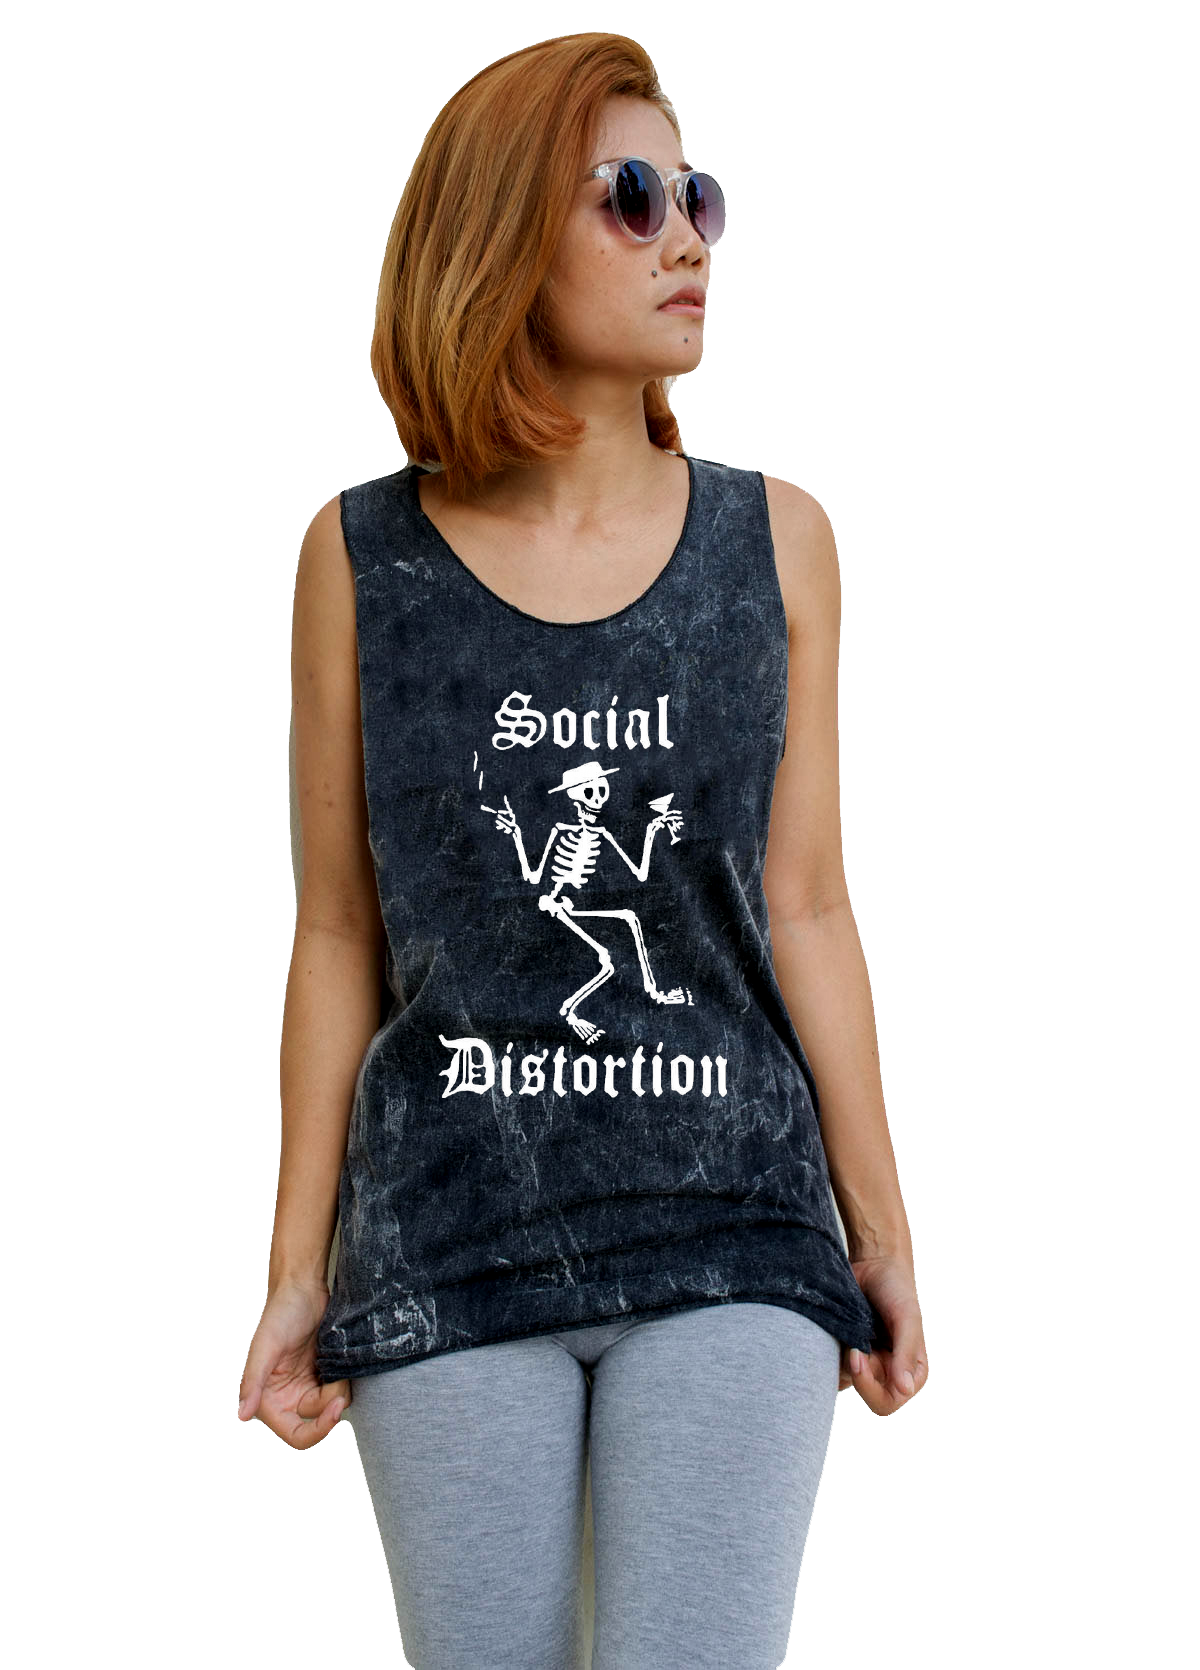 Unisex Social Distortion Tank-Top Singlet vest Sleeveless T-shirt